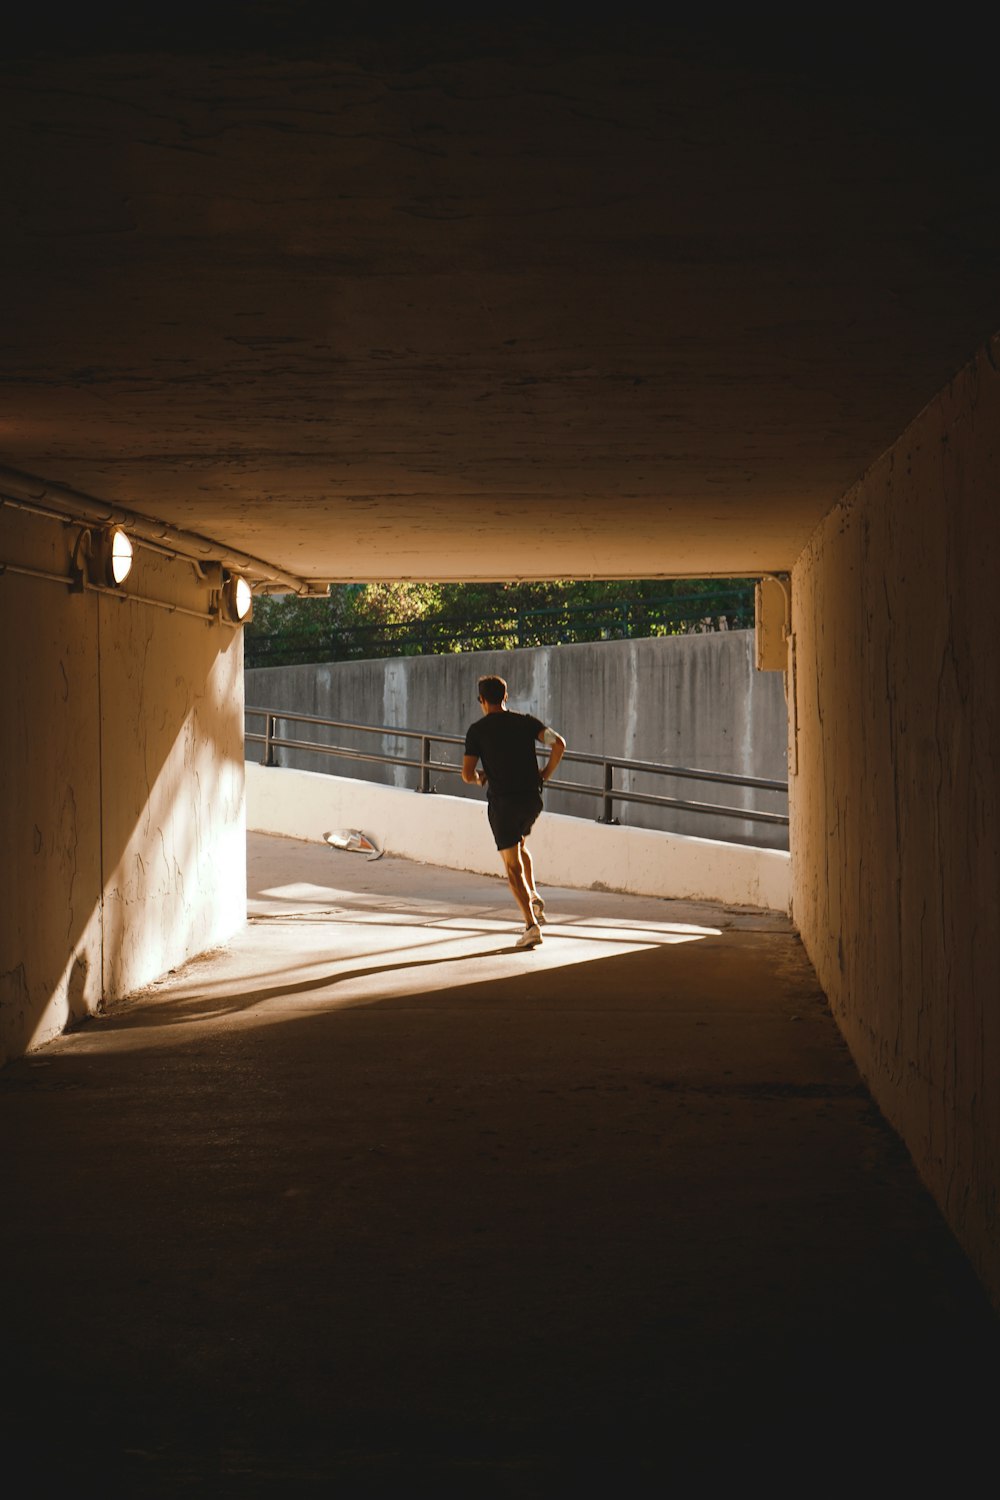 a man running in a tunnel under a bridge